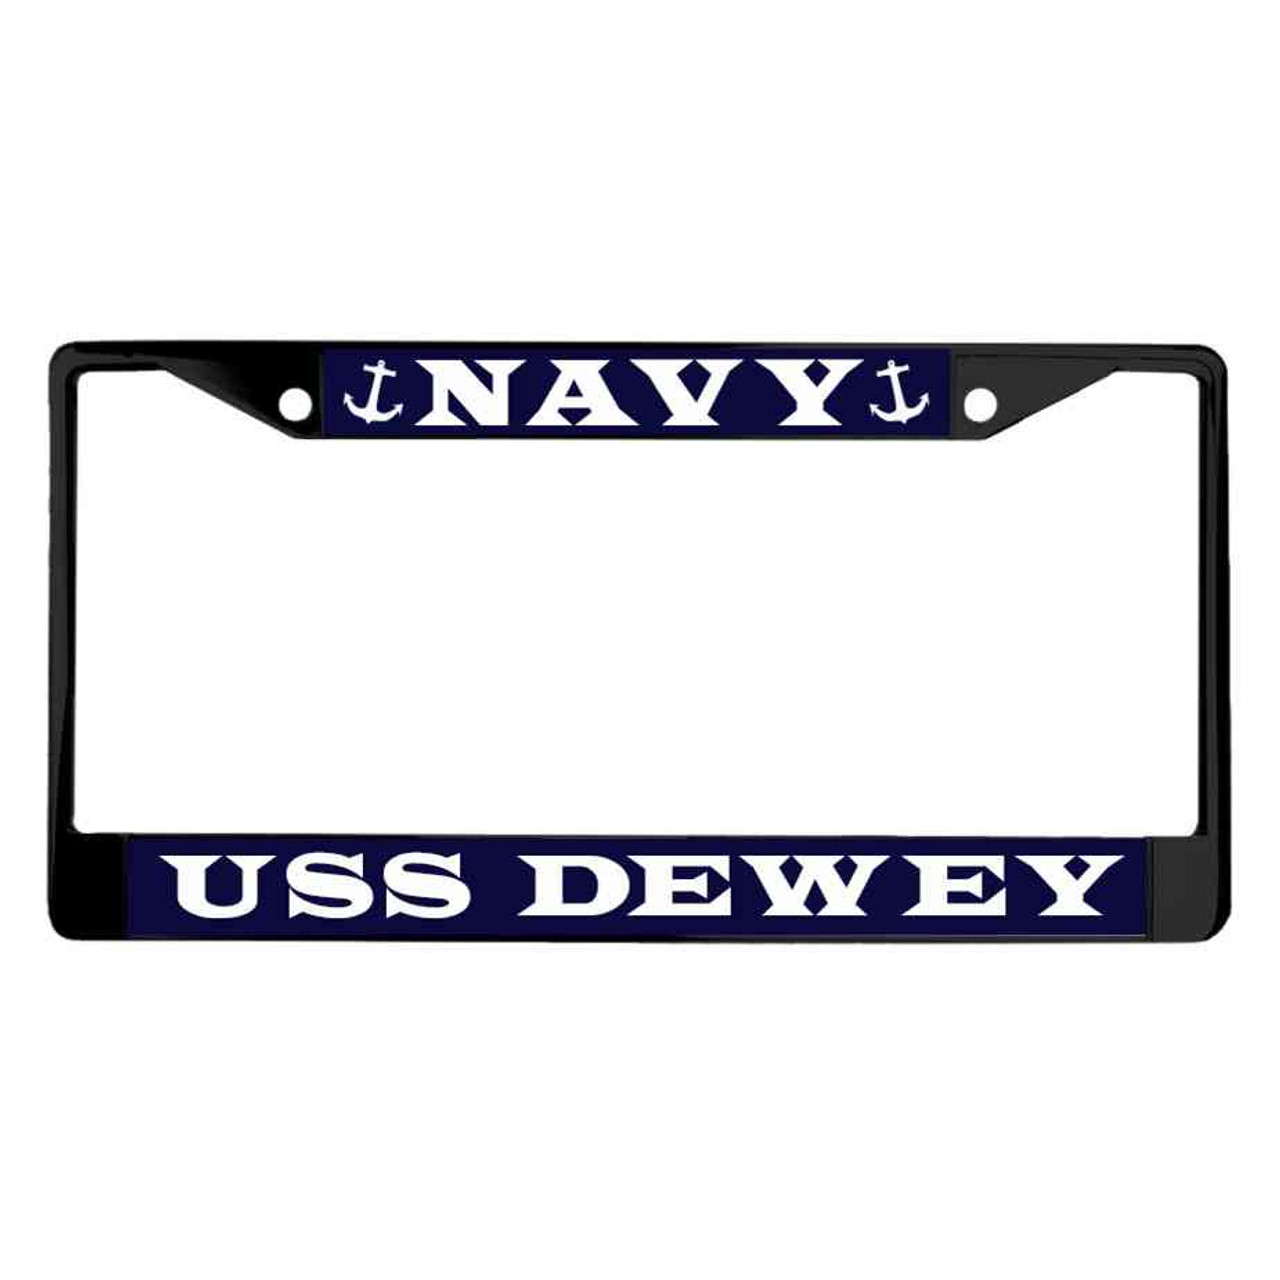 uss dewey powder coated license plate frame